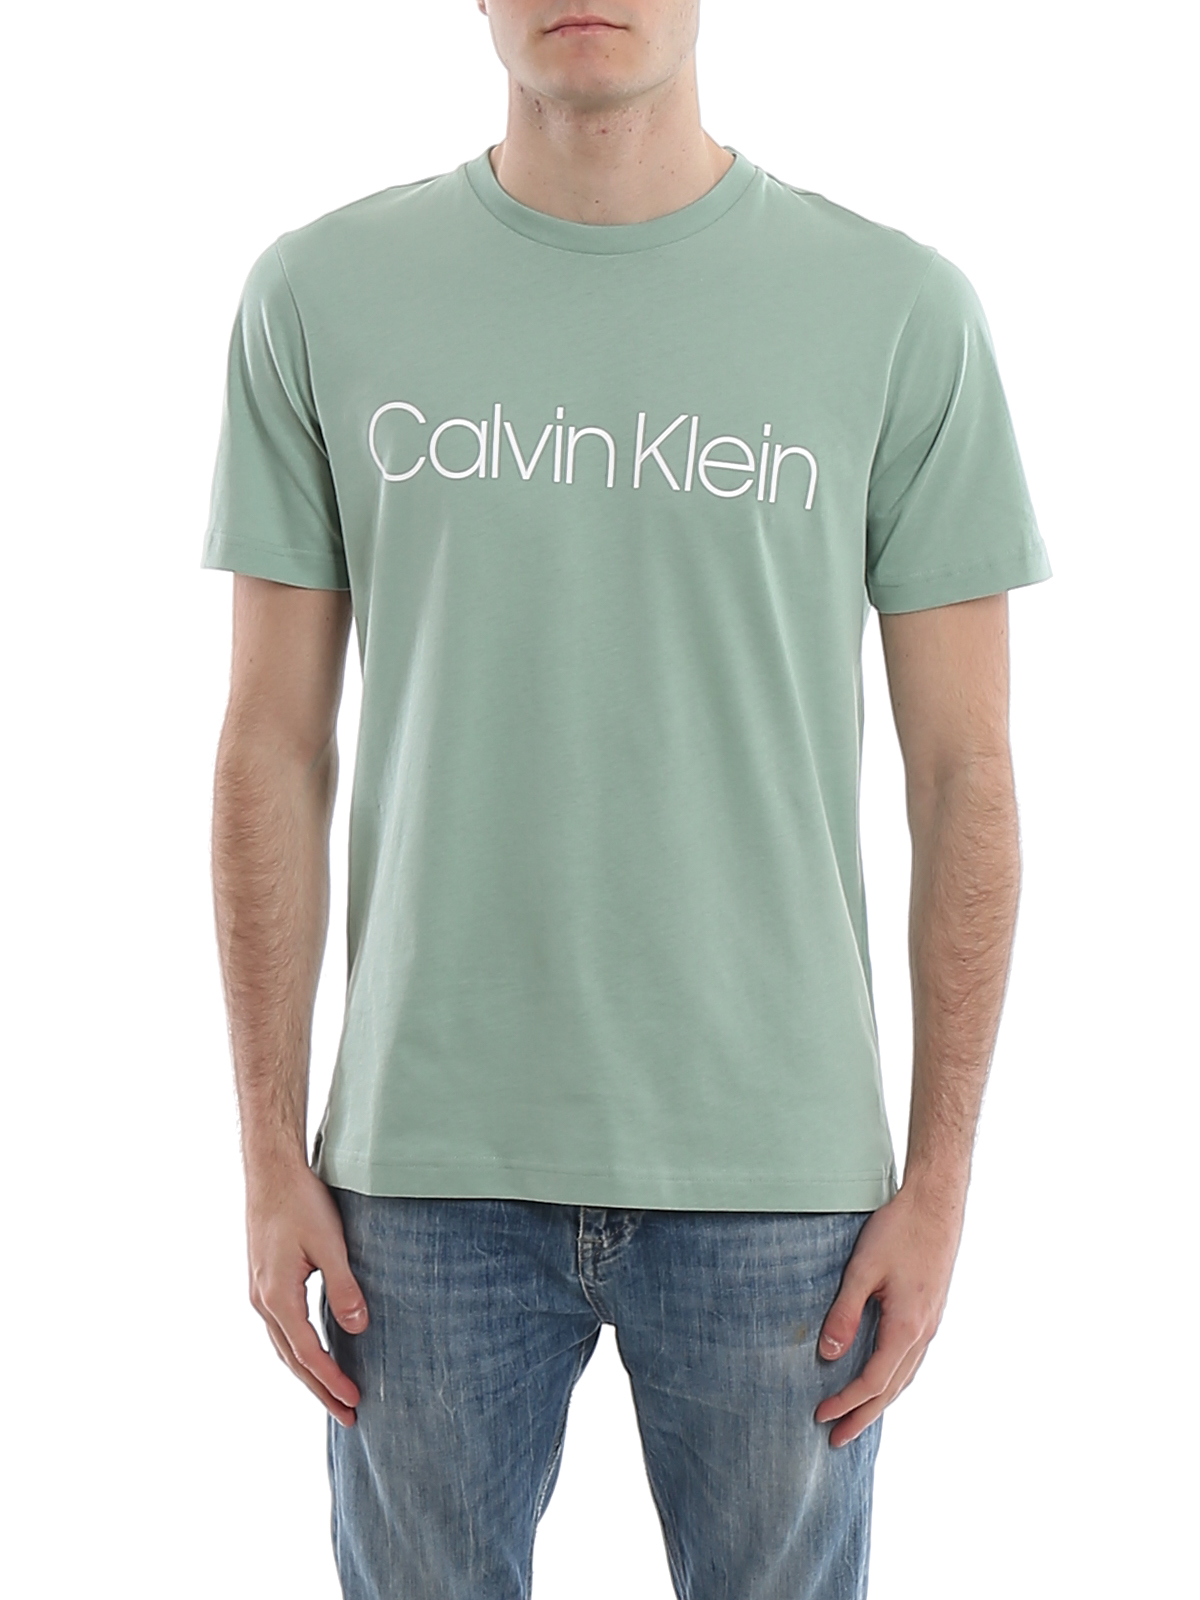 Miguel Ángel arco Excéntrico Camisetas Calvin Klein - Camiseta - Verde Claro - K10K103078LFG